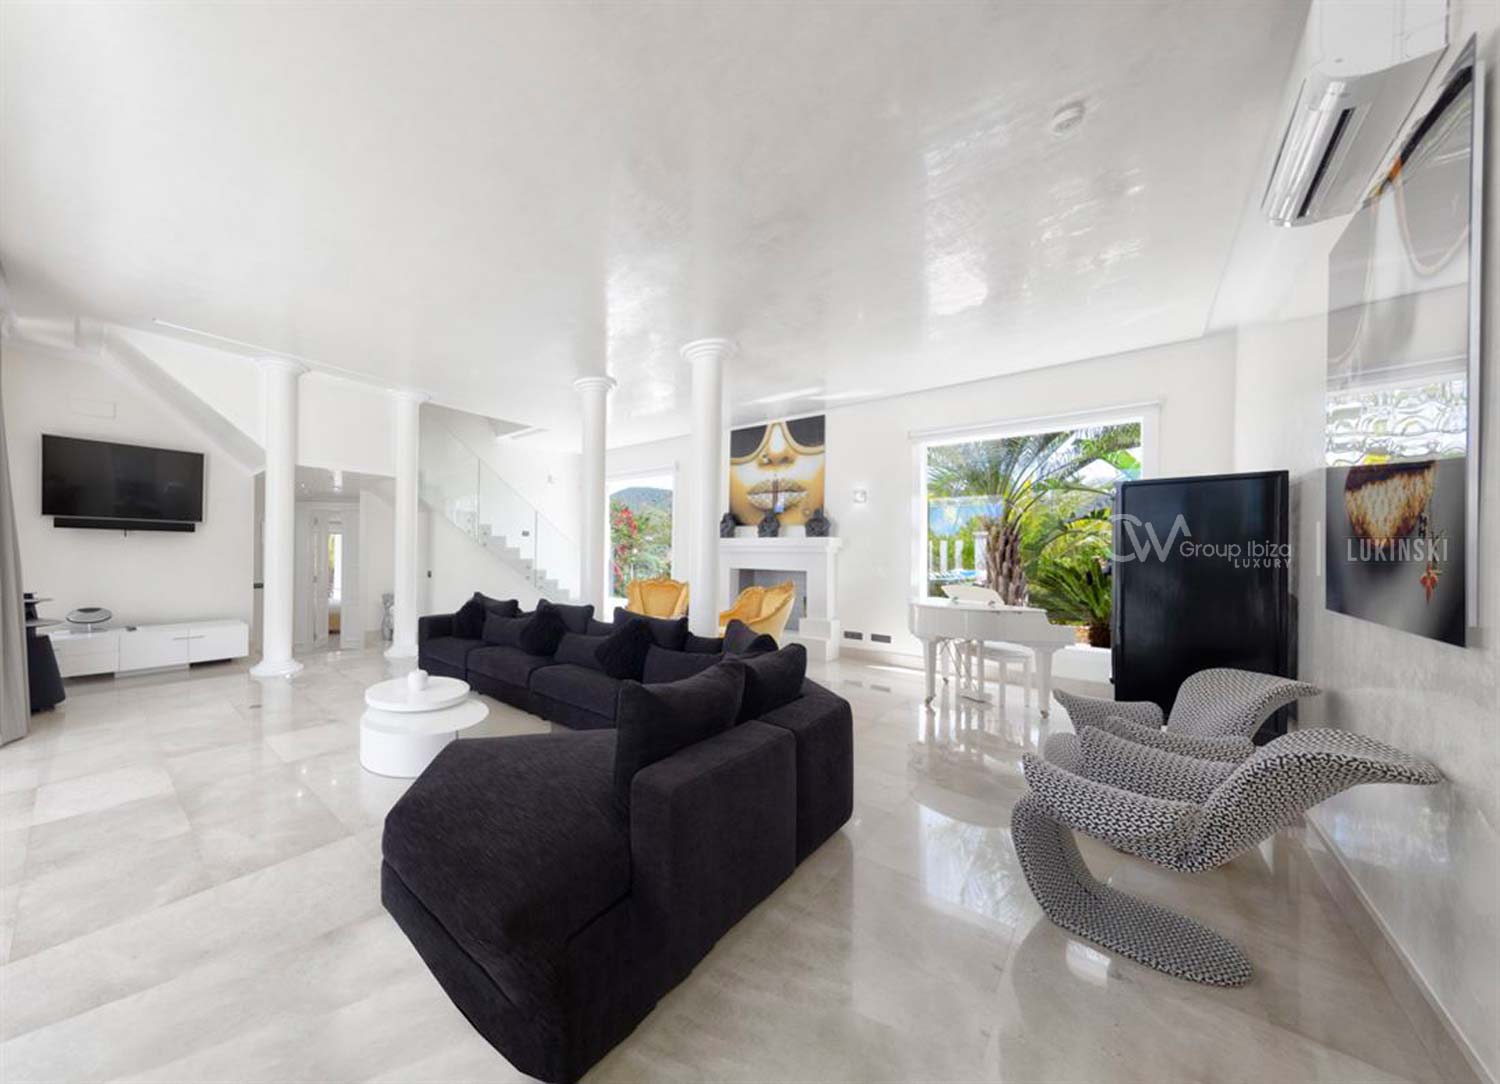 Ibiza, Spain – Luxury villa with private tennis court in Cala Jondal – € 7.200.000